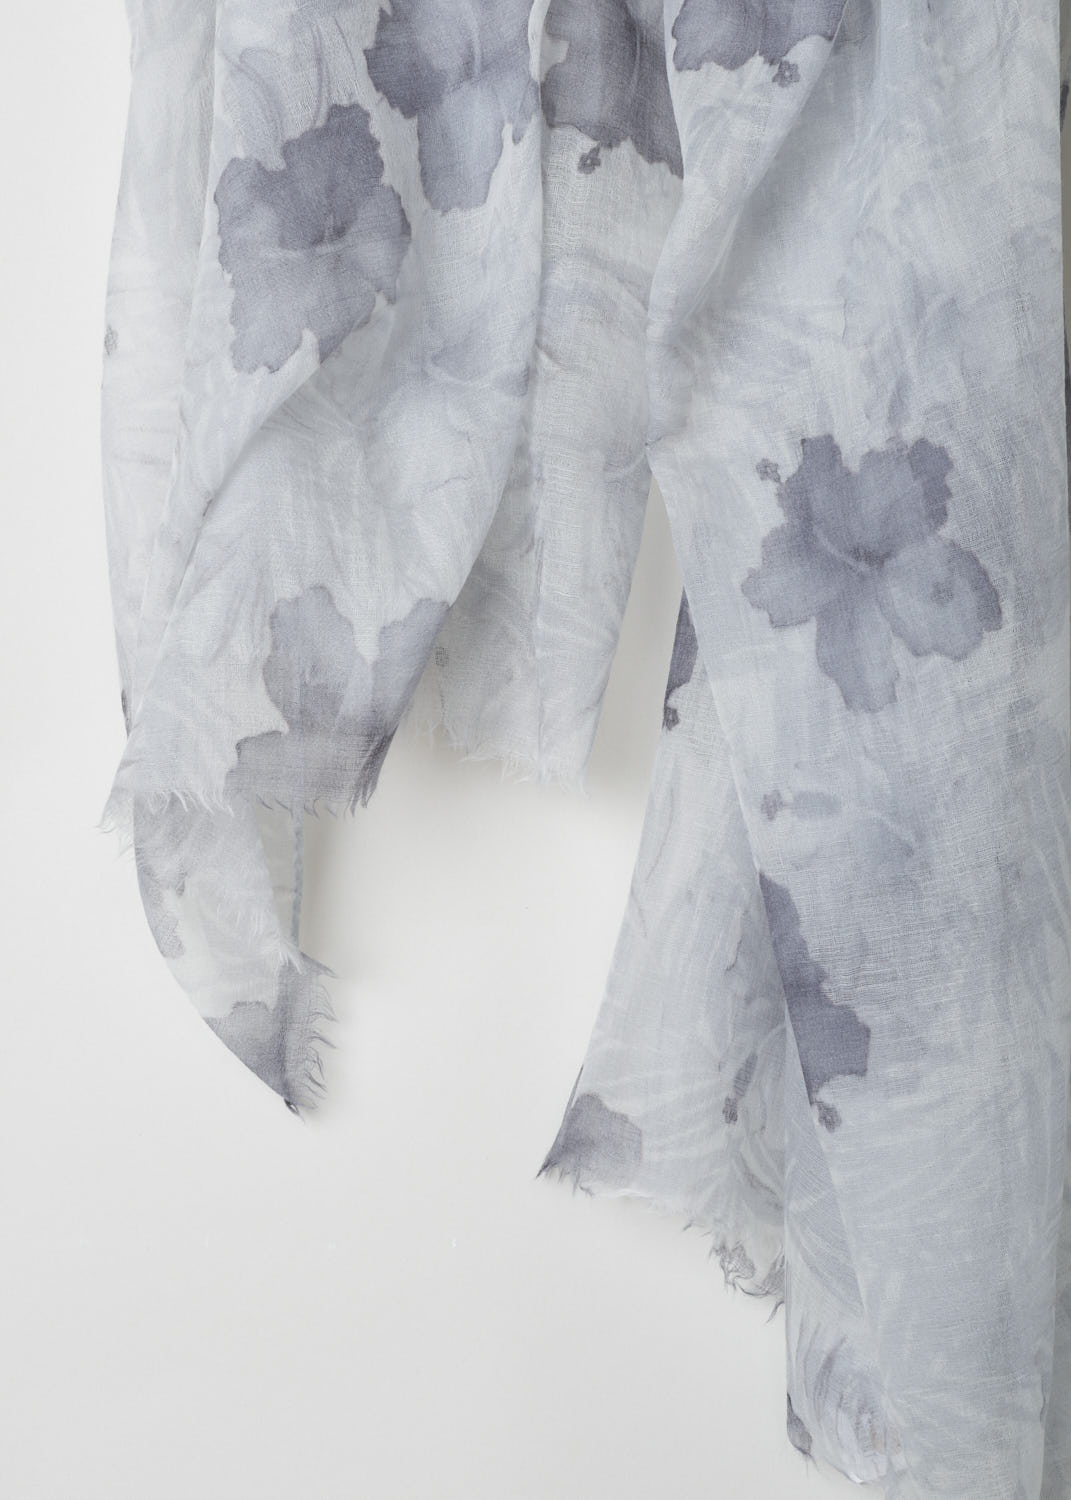 BRUNELLO CUCINELLI, FLORAL PRINT SHAWL IN GREY SHADES, MSCDAGW06_CF195, Grey, Print, Detail, Beautiful shawl with a floral pattern in soft grey hues. 

Length: 230 cm / 90.5 inch.
